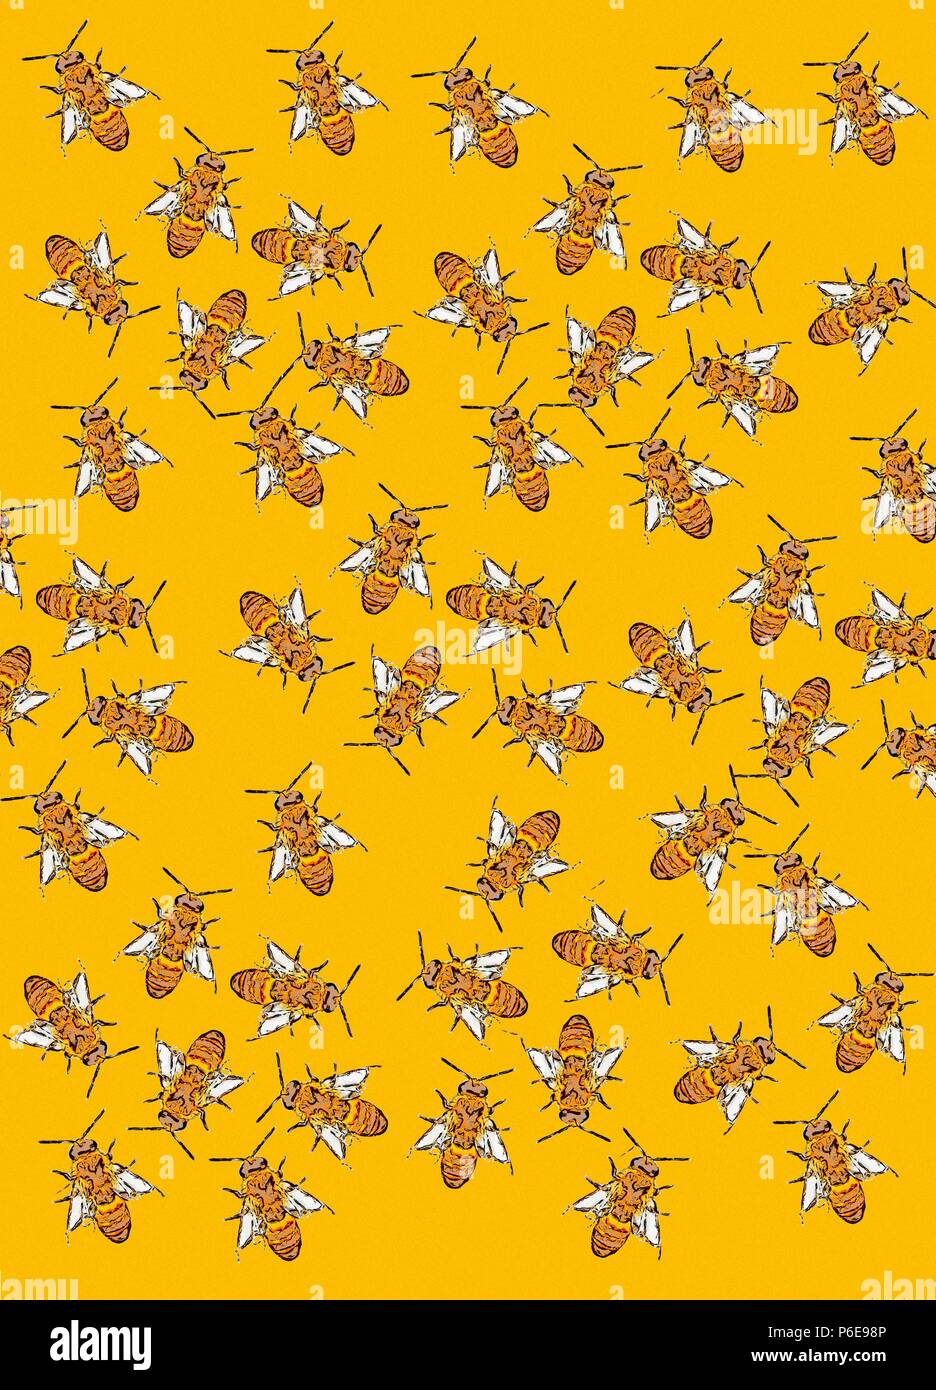 Honey bees, conceptual illustration. Stock Photo